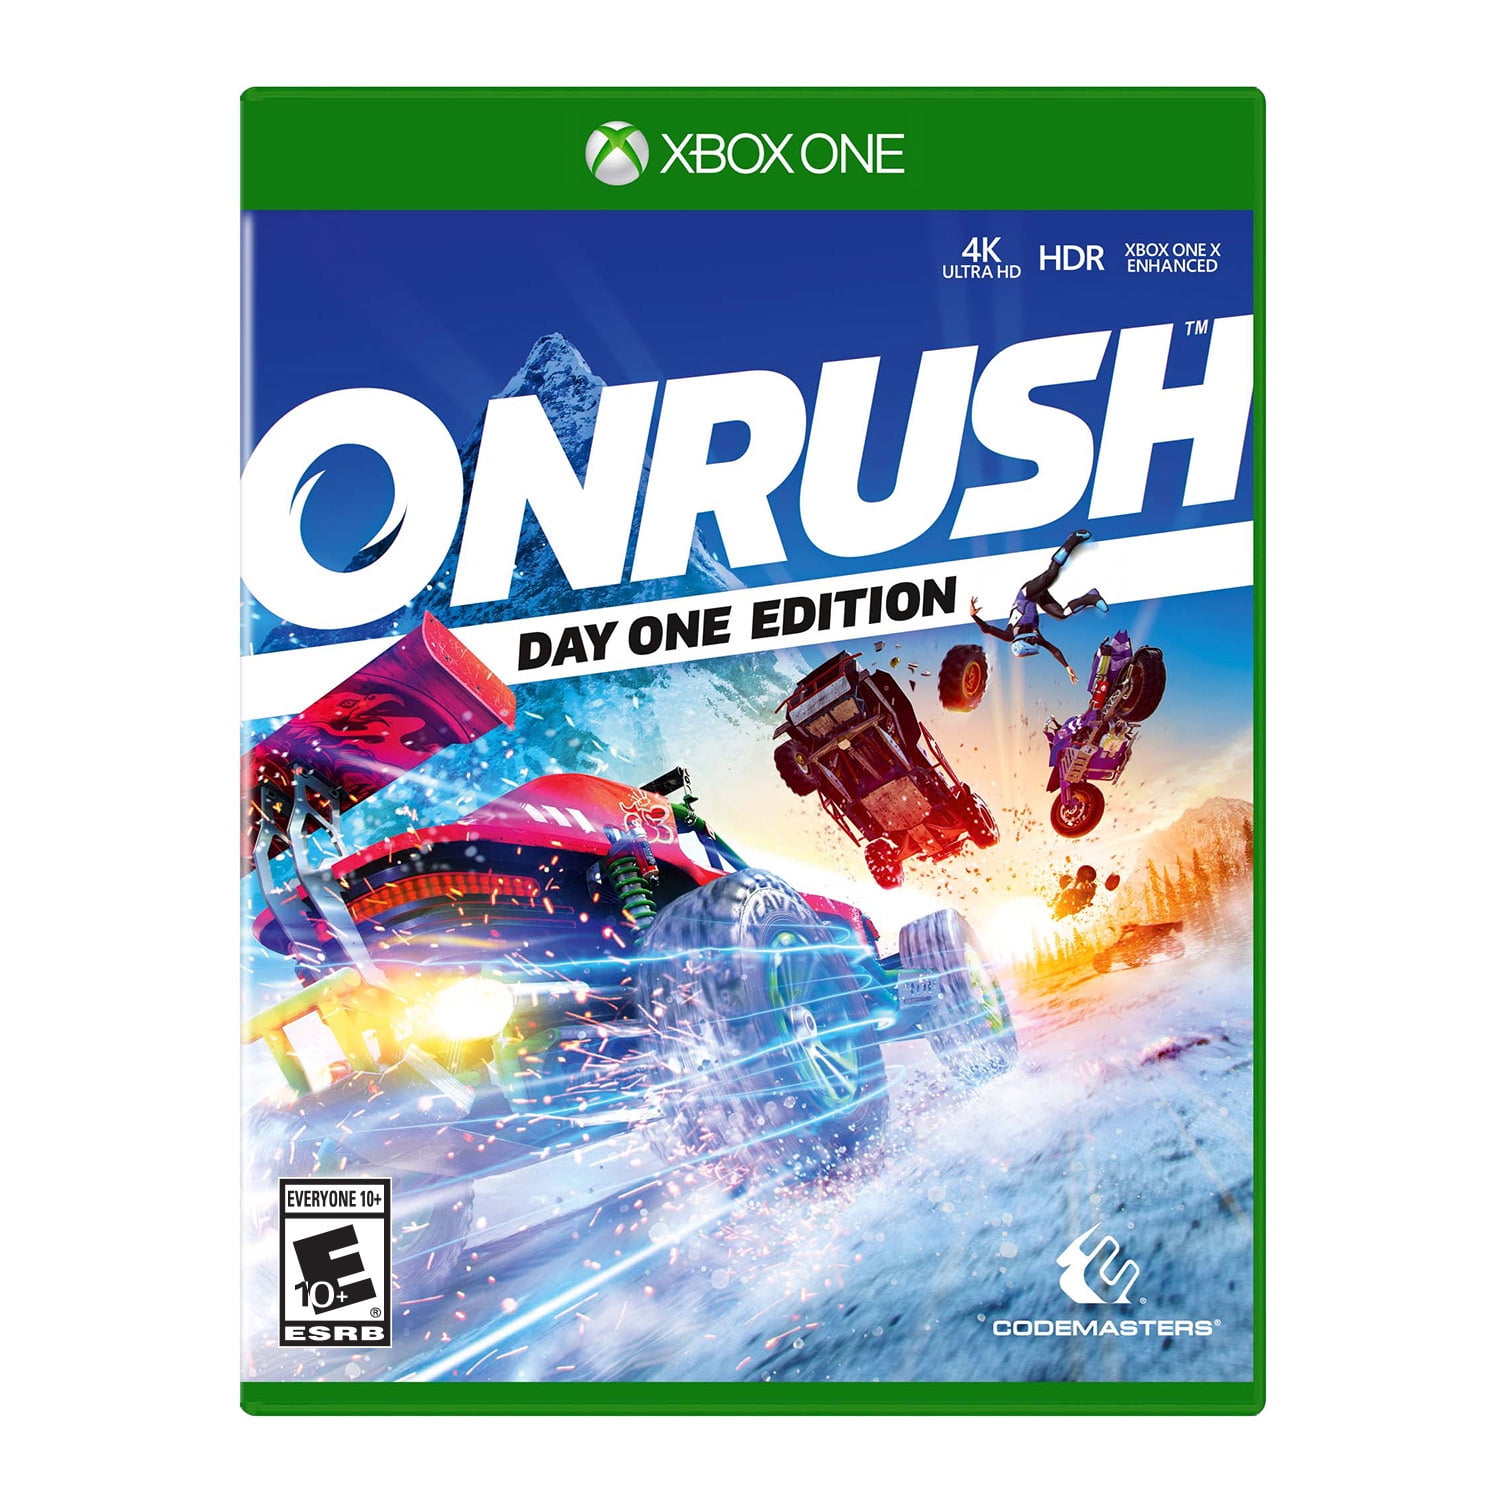 Onrush Day One Edition, Square Enix, Xbox One, 816819015063